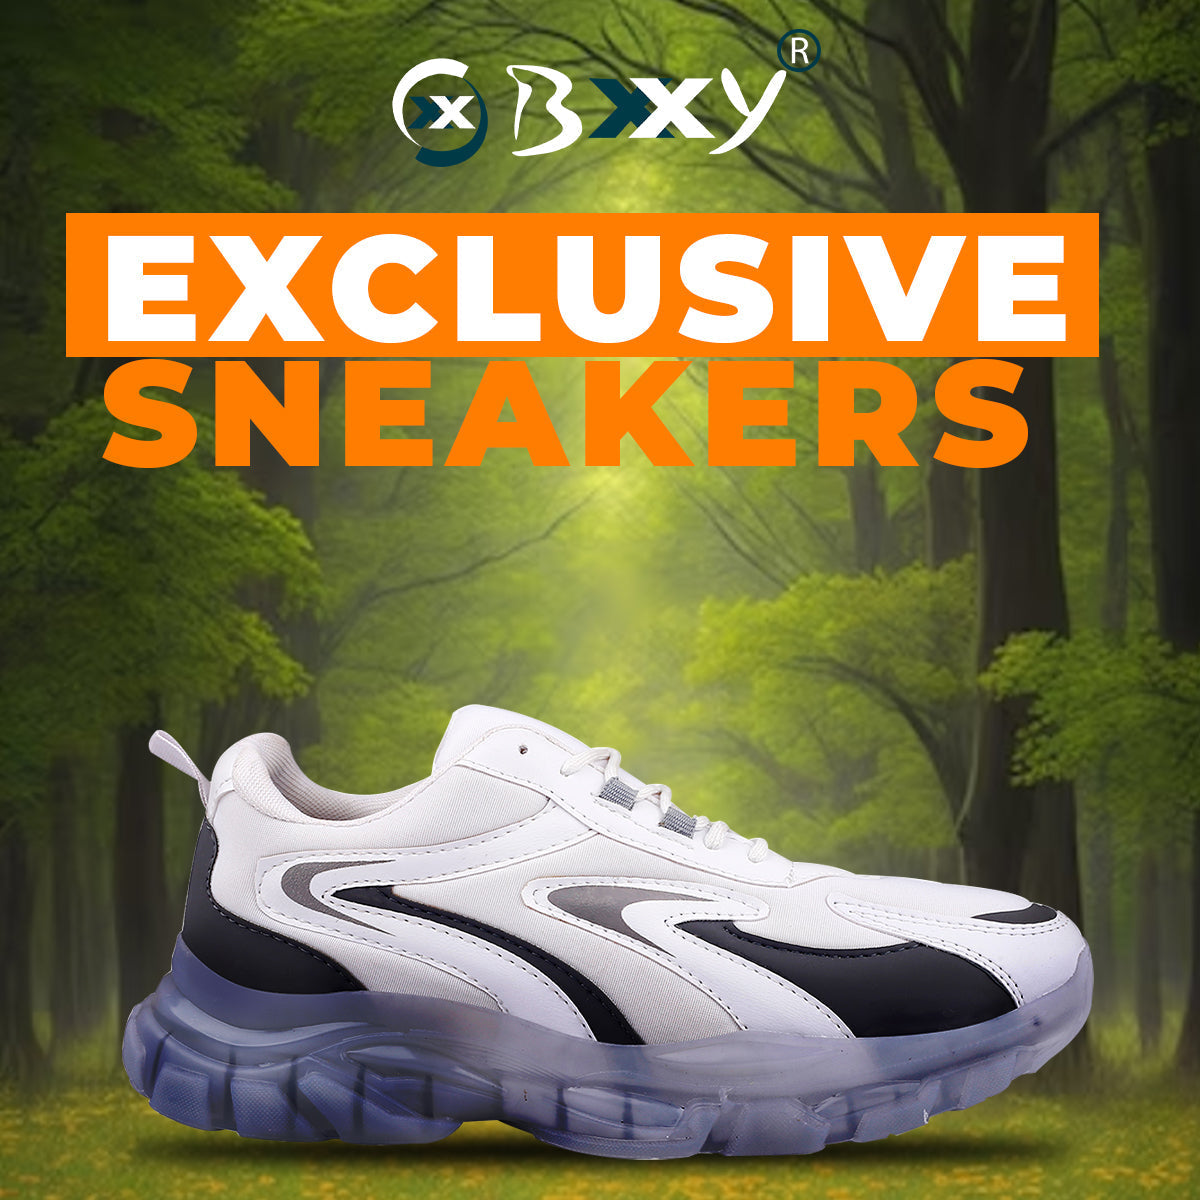 Bxxy's Colour Blend Ultra Fit Comfort Sports Shoes for Men